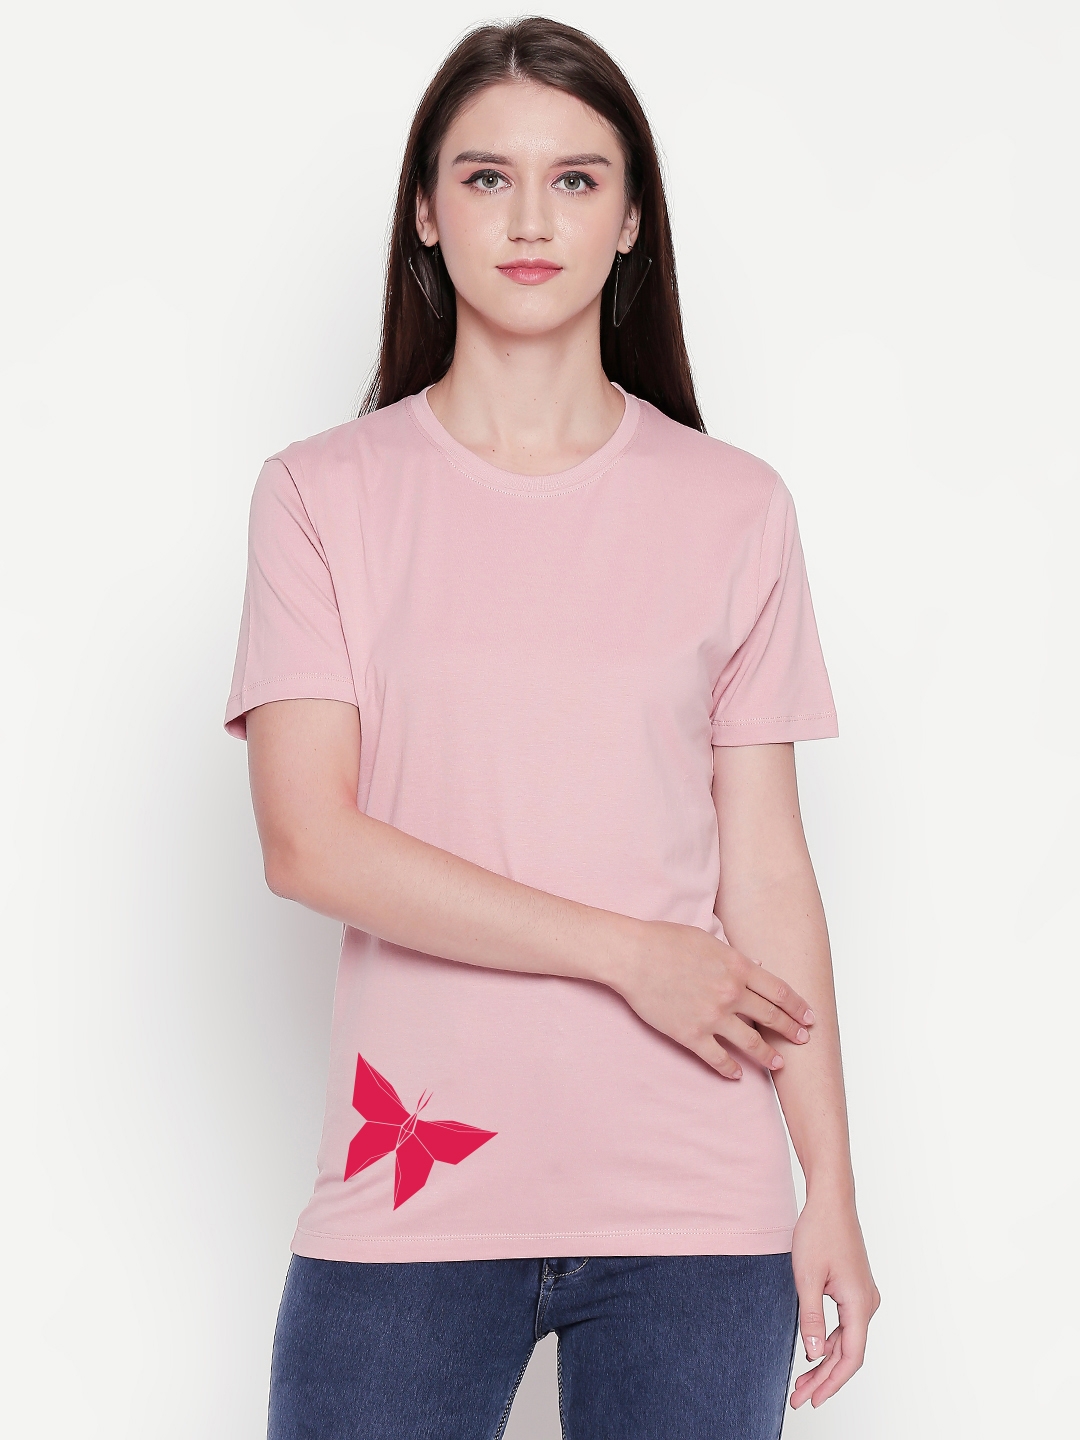 creativeideas.store | Origami Butterfly Pink Tshirt